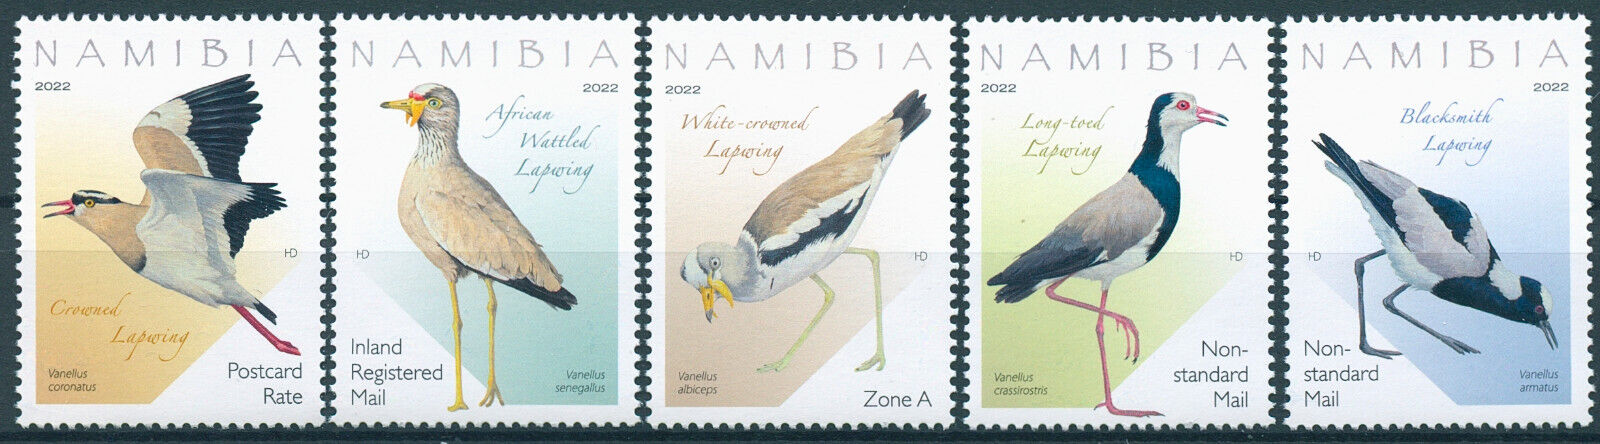 Namibia 2022 MNH Birds on Stamps Lapwings Blacksmith Crowned Lapwing 5v Set